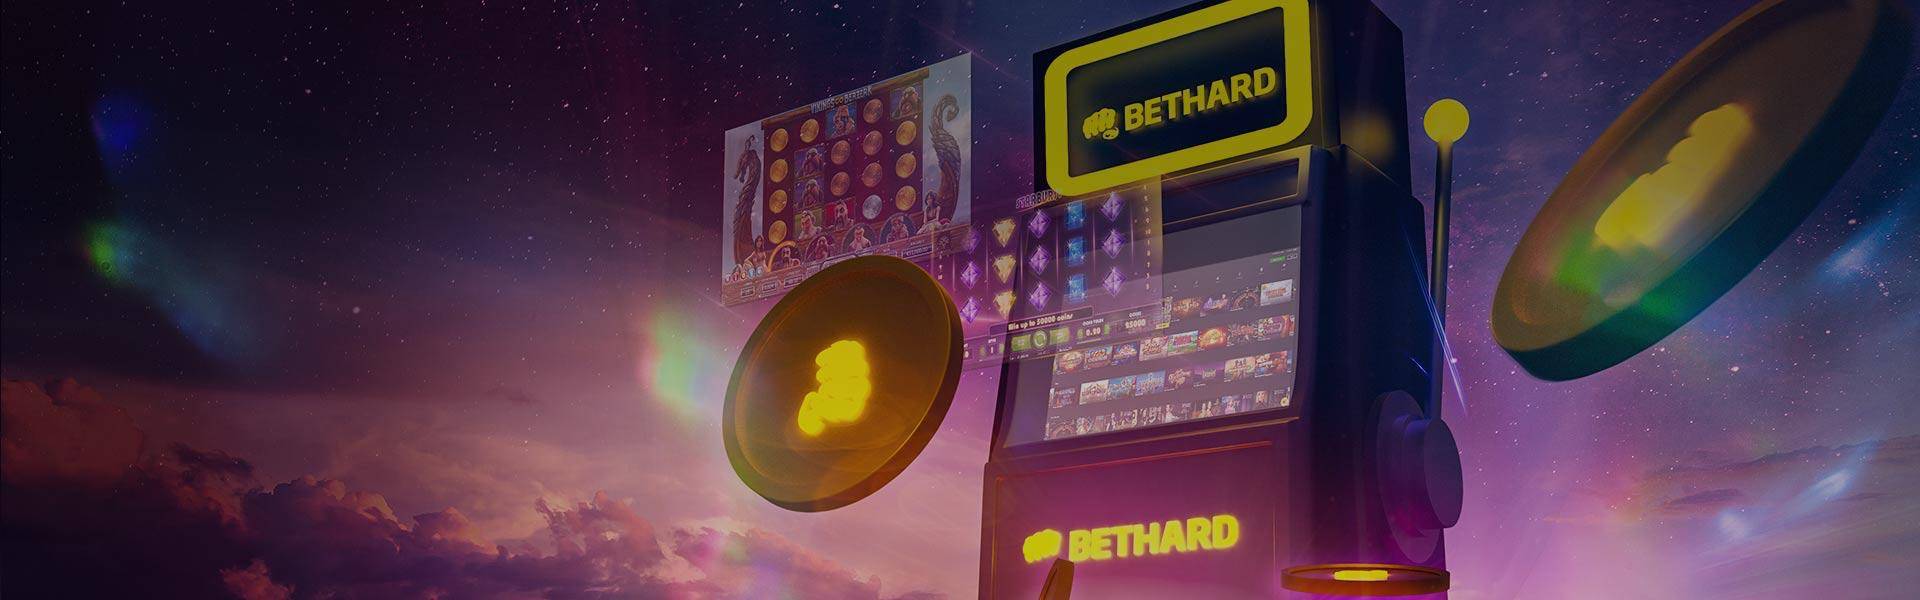 BetHard casino